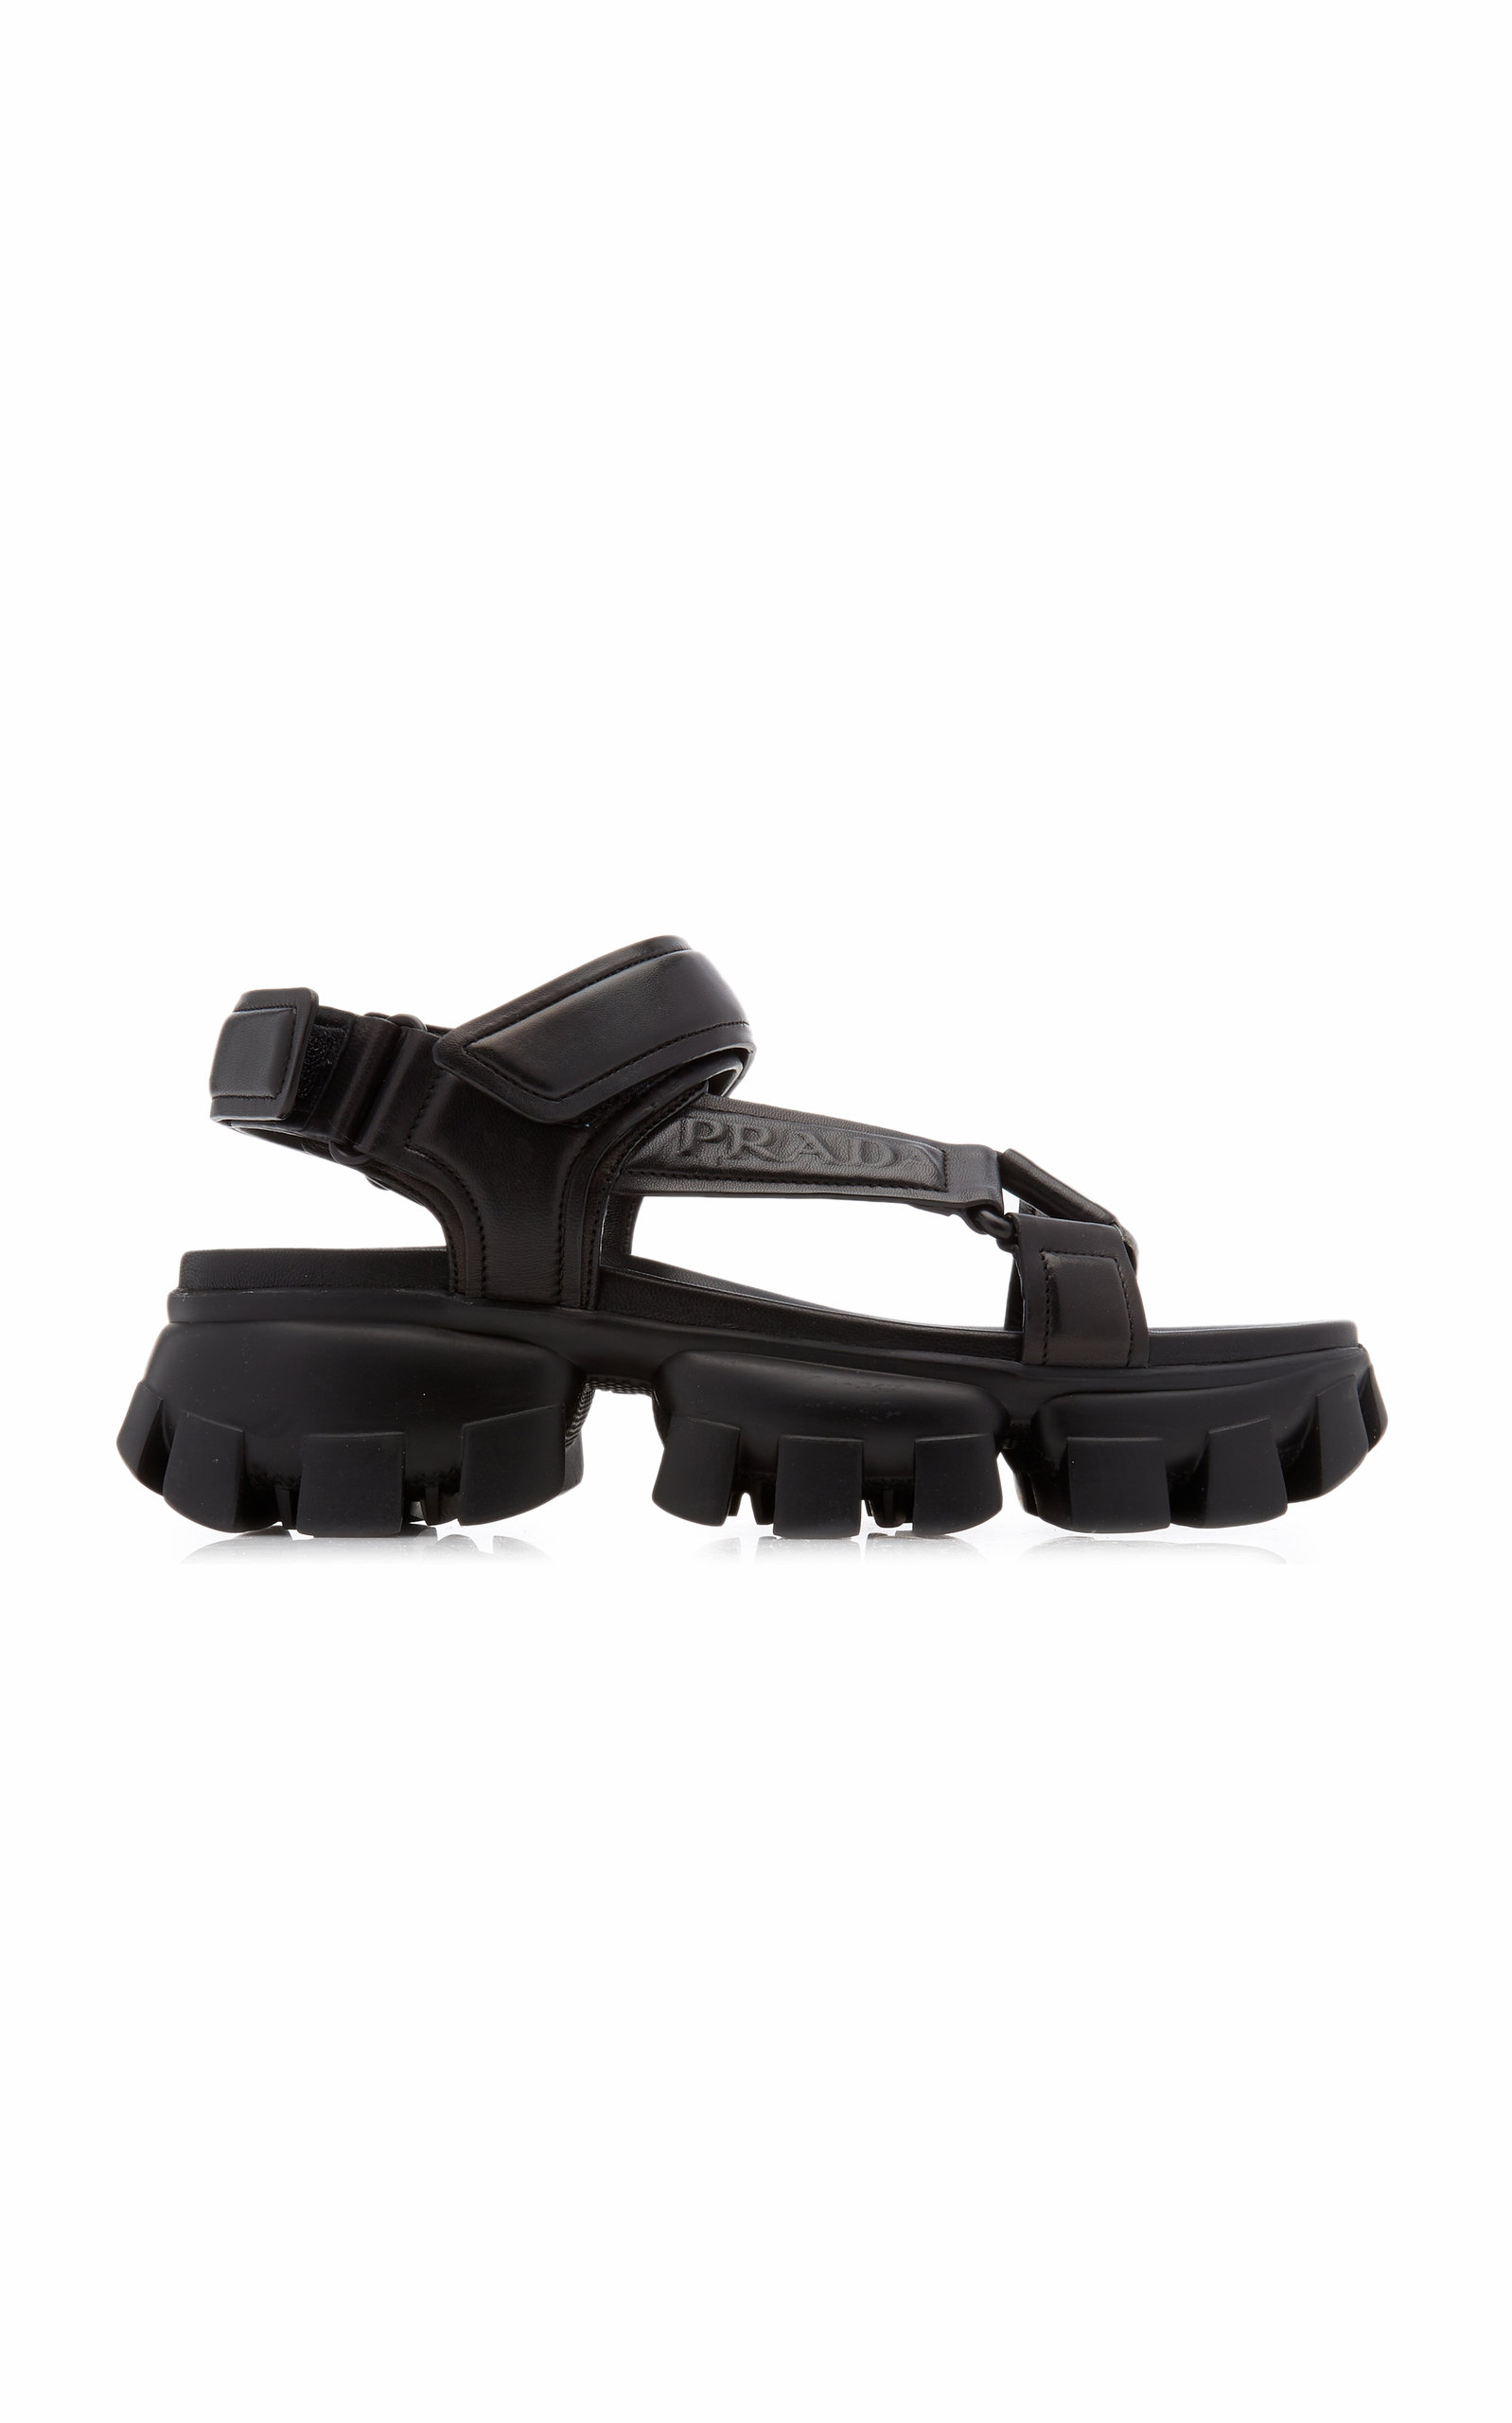 Prada - Leather Sandals - Black - IT 37 - Moda Operandi